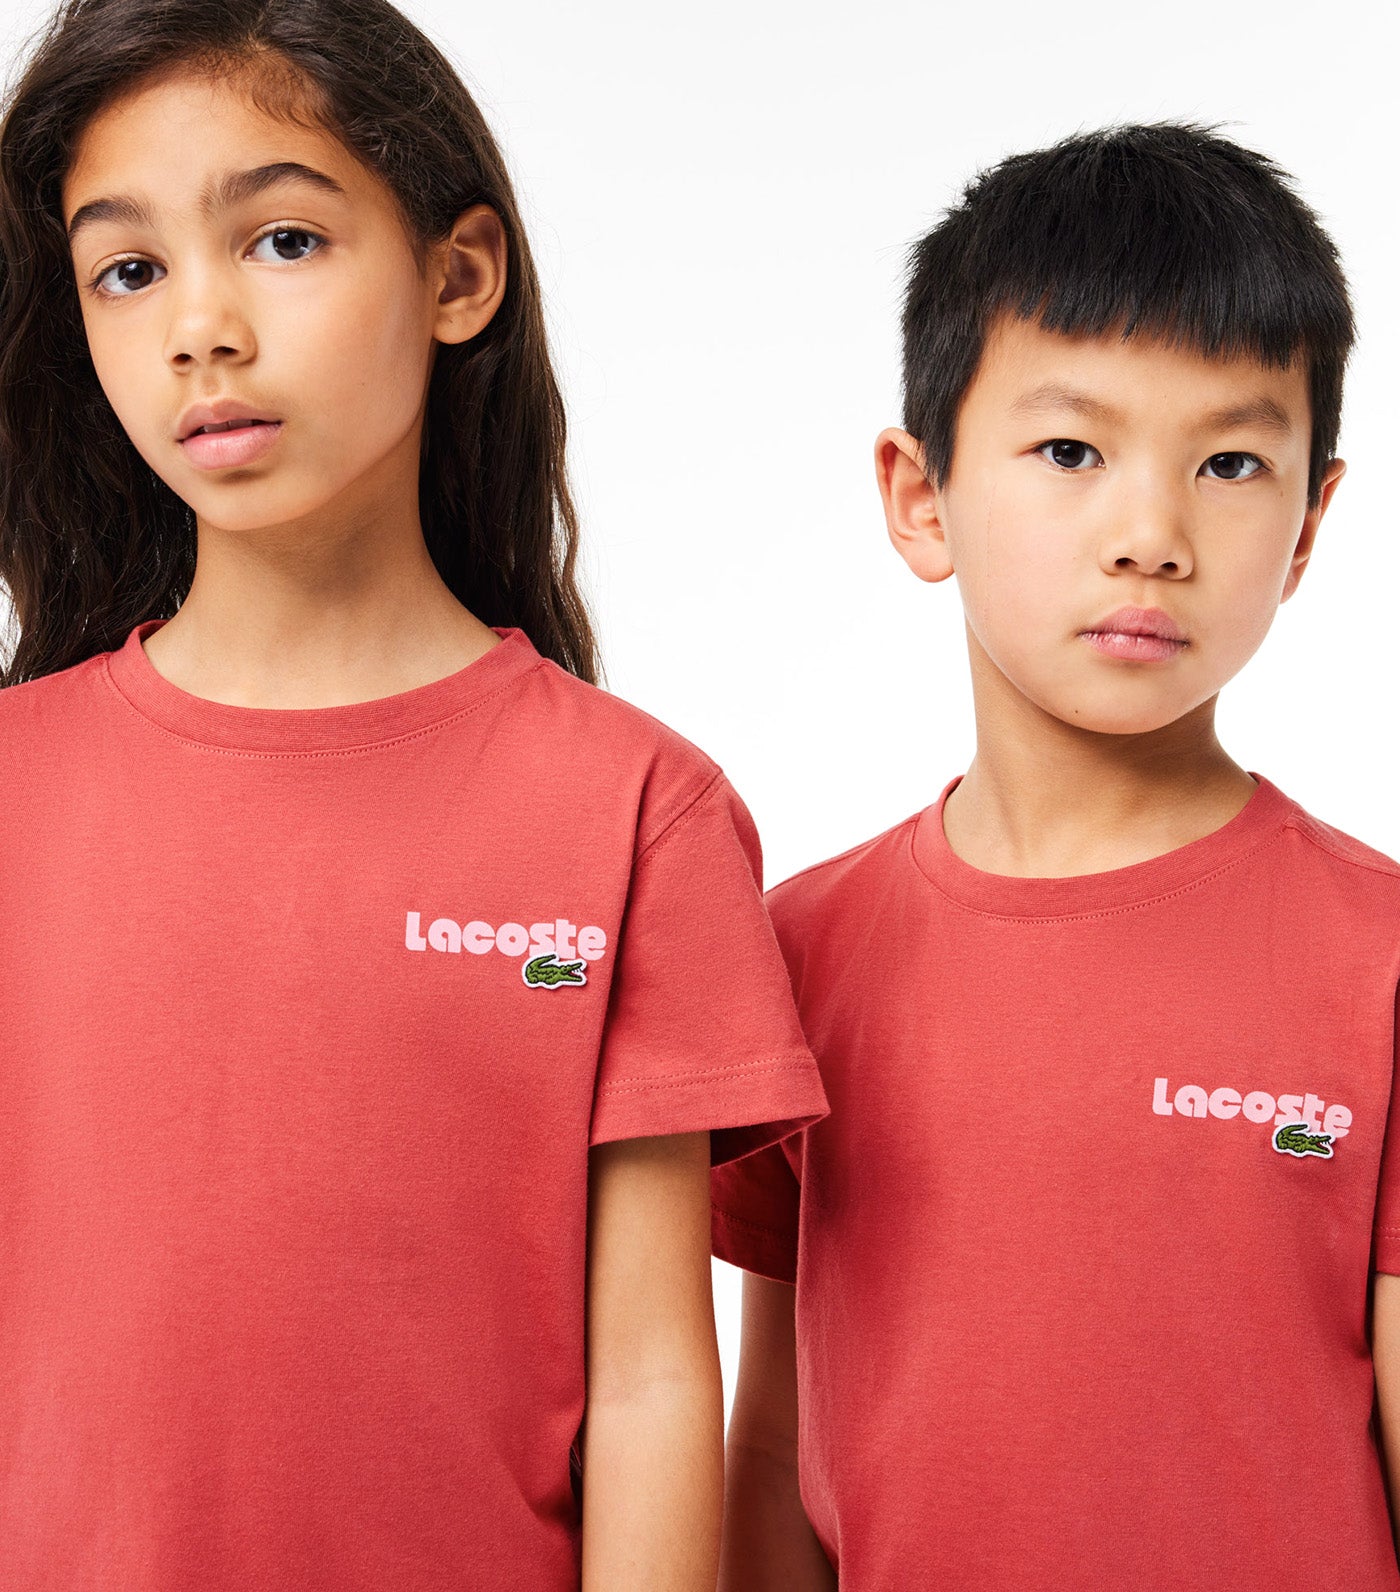 Kids' Contrast Print Cotton Jersey T-shirt Sierra Red